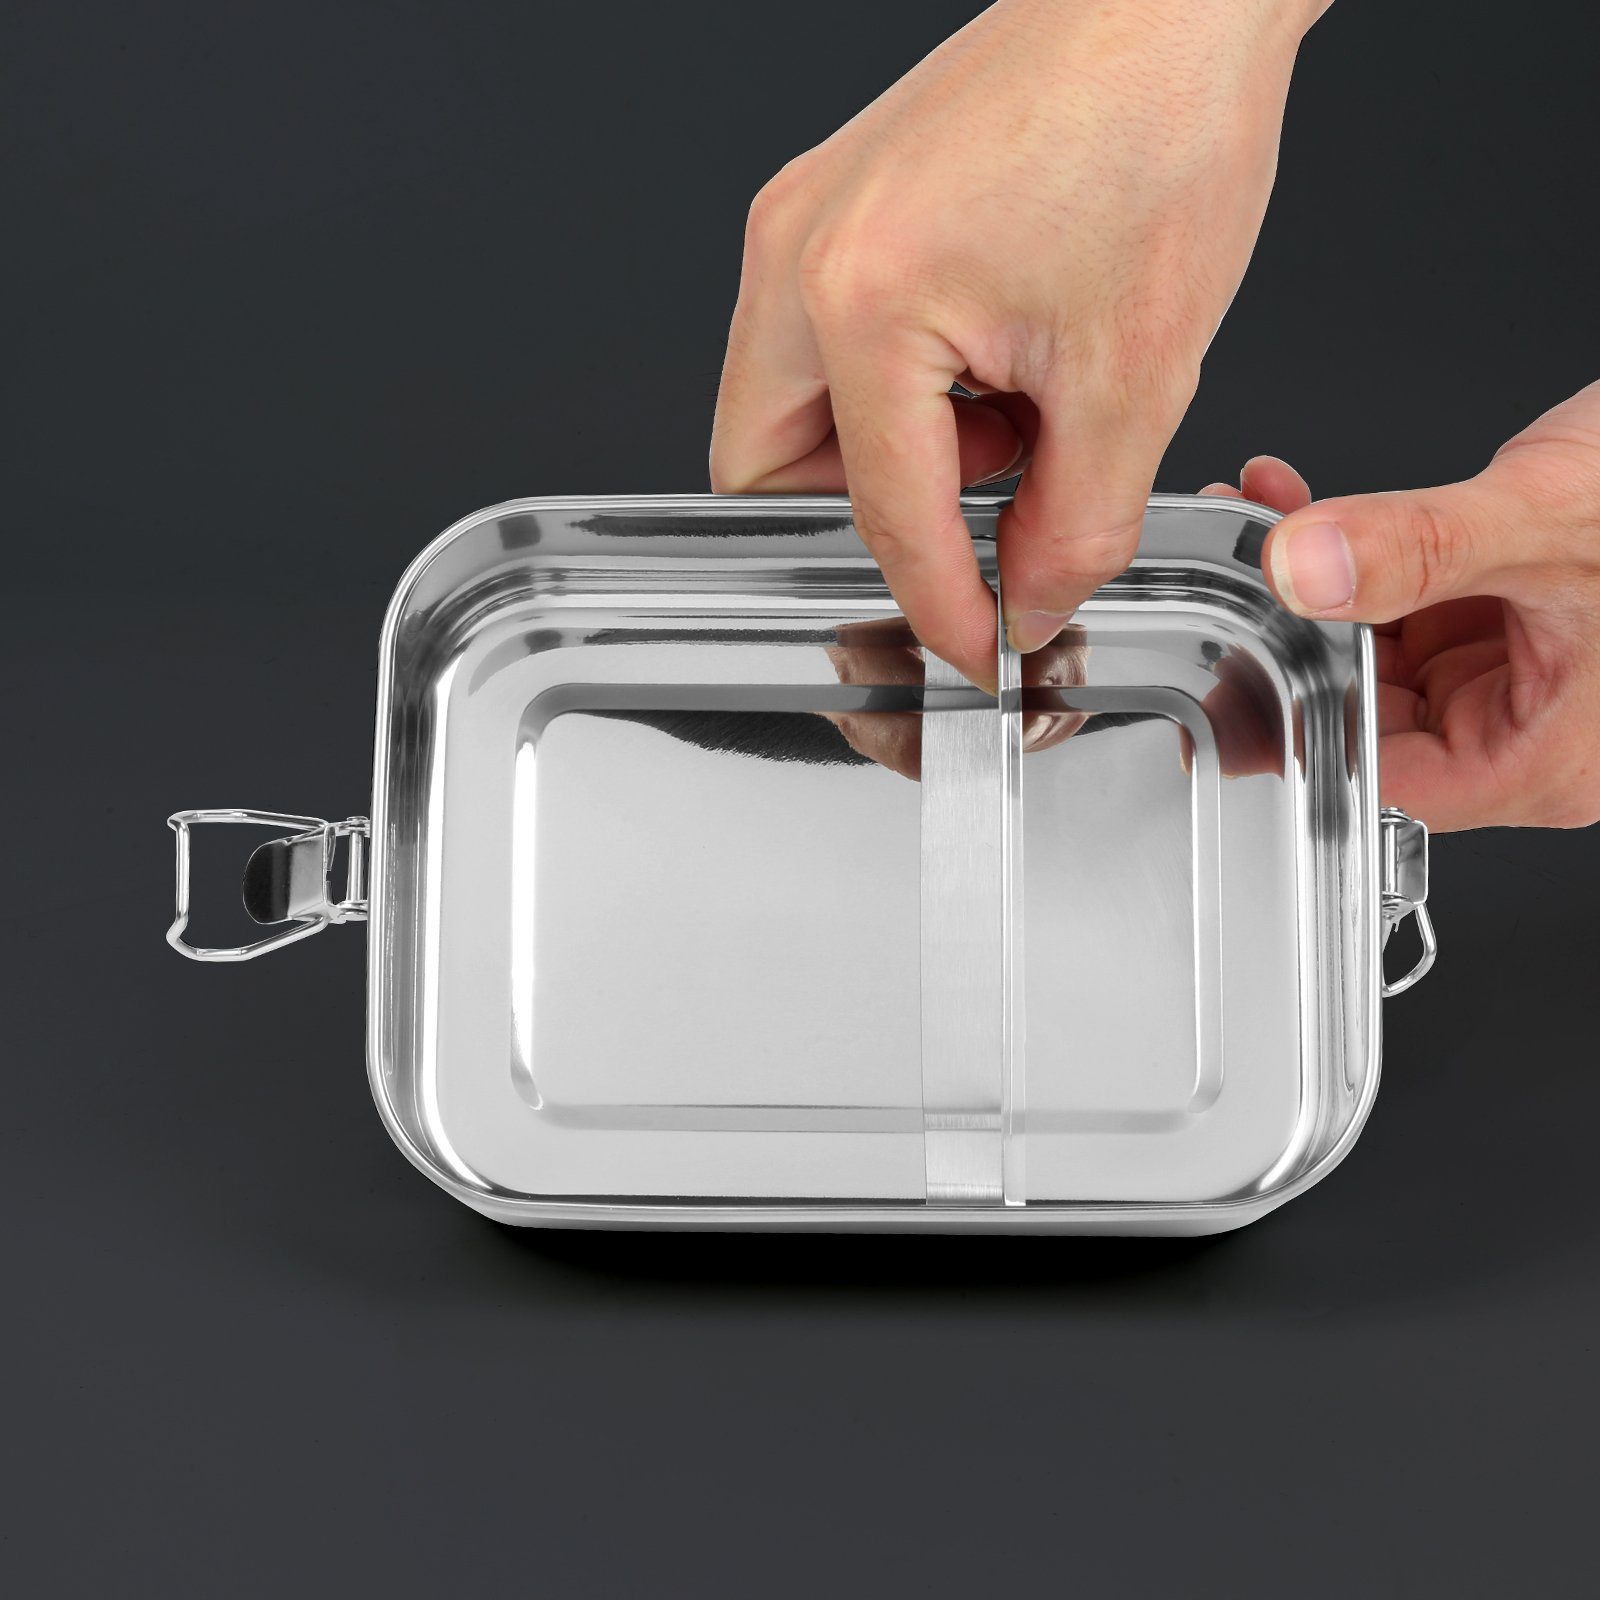 Clanmacy Lunchbox frei Lunchbox (abnehmbar) 1200ml Fächern 800-1400ml BPA Brotdose Edelstahl, Metall Thermobehälter Brotdose Silber